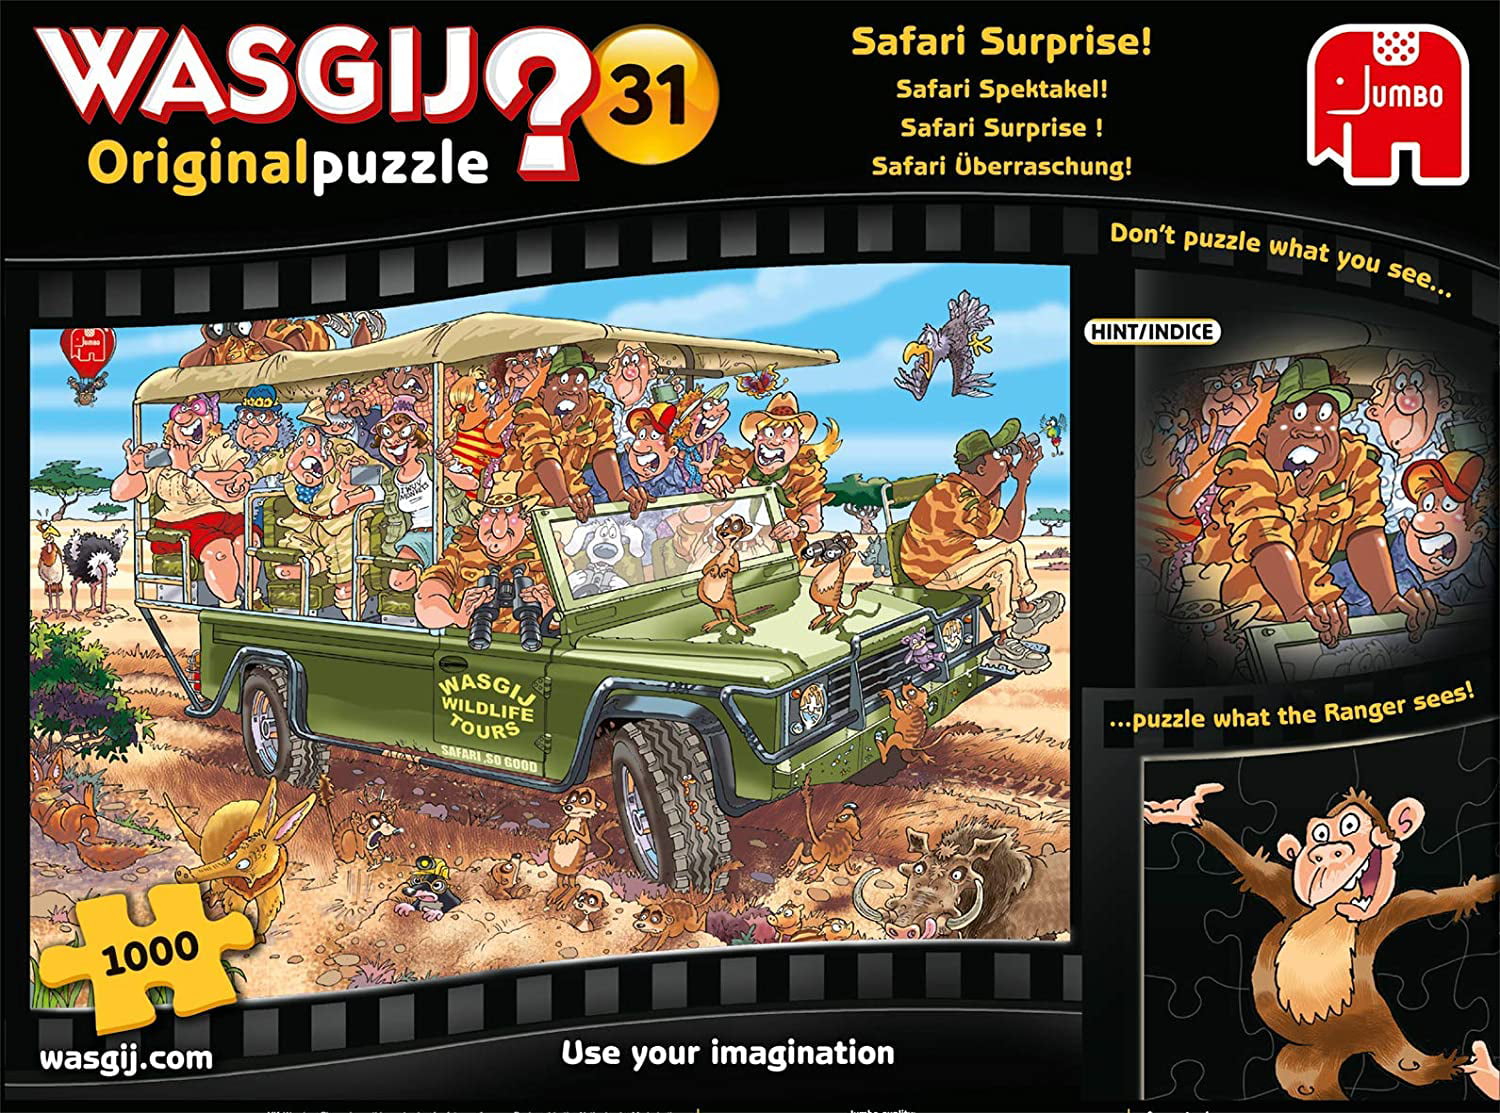 Wasgij Original 31 Safari Surprise 1000 pieces Jigsaw Puzzle 